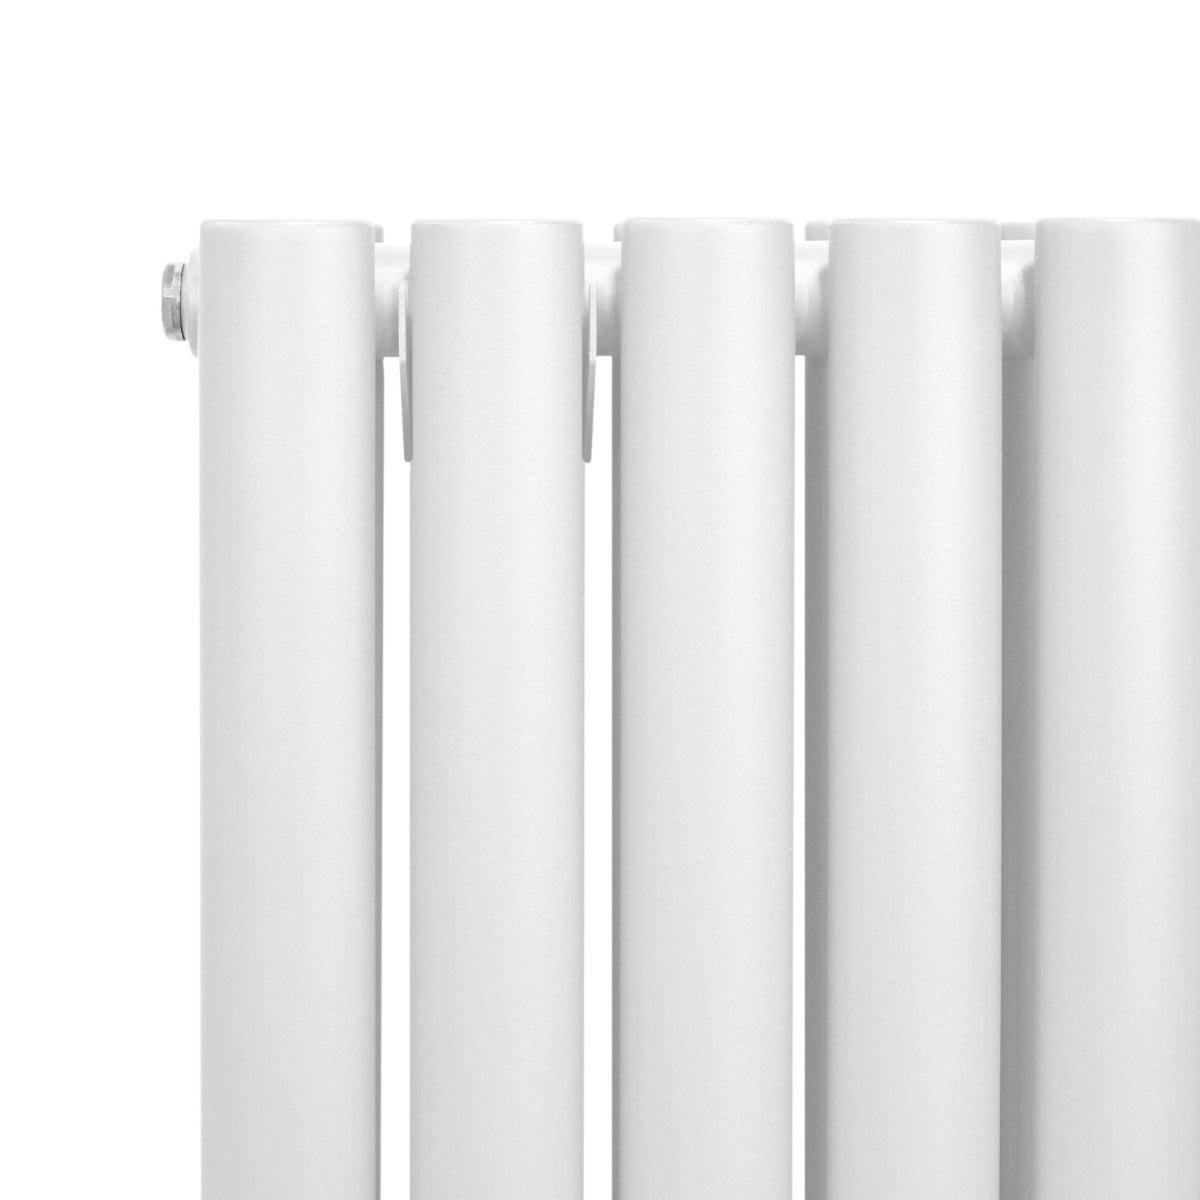 Oval Column Radiator – 1800mm x 360mm – White